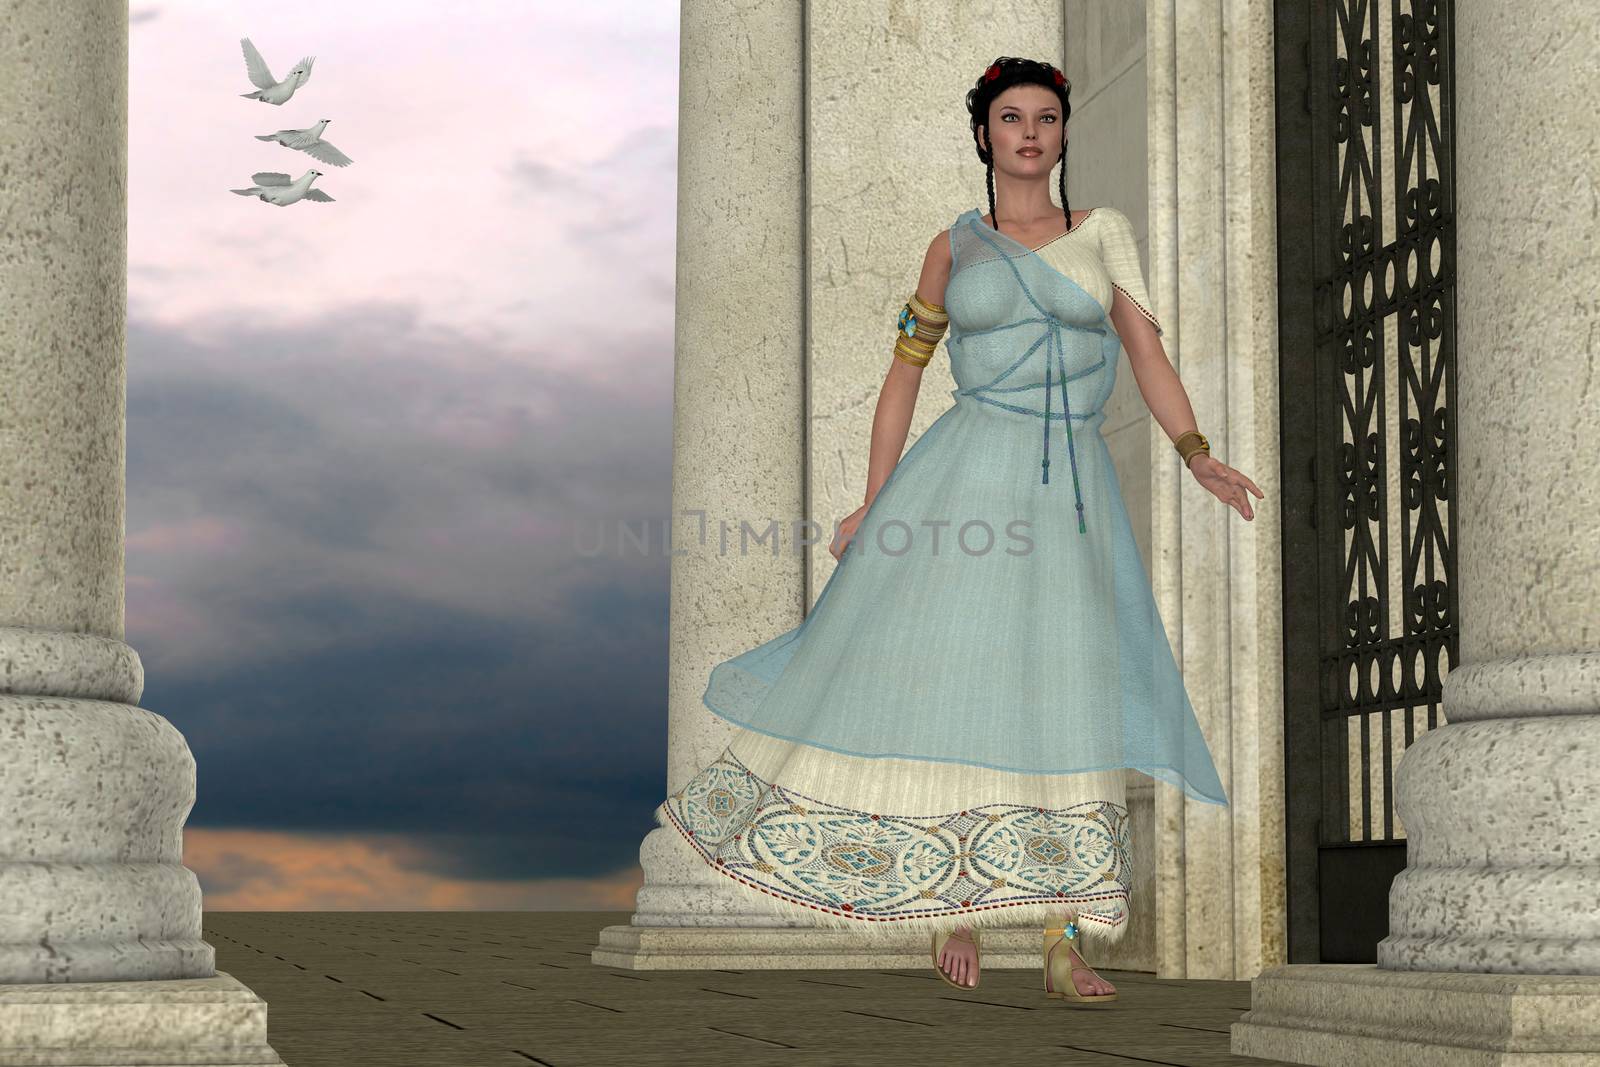 Roman Woman by Catmando